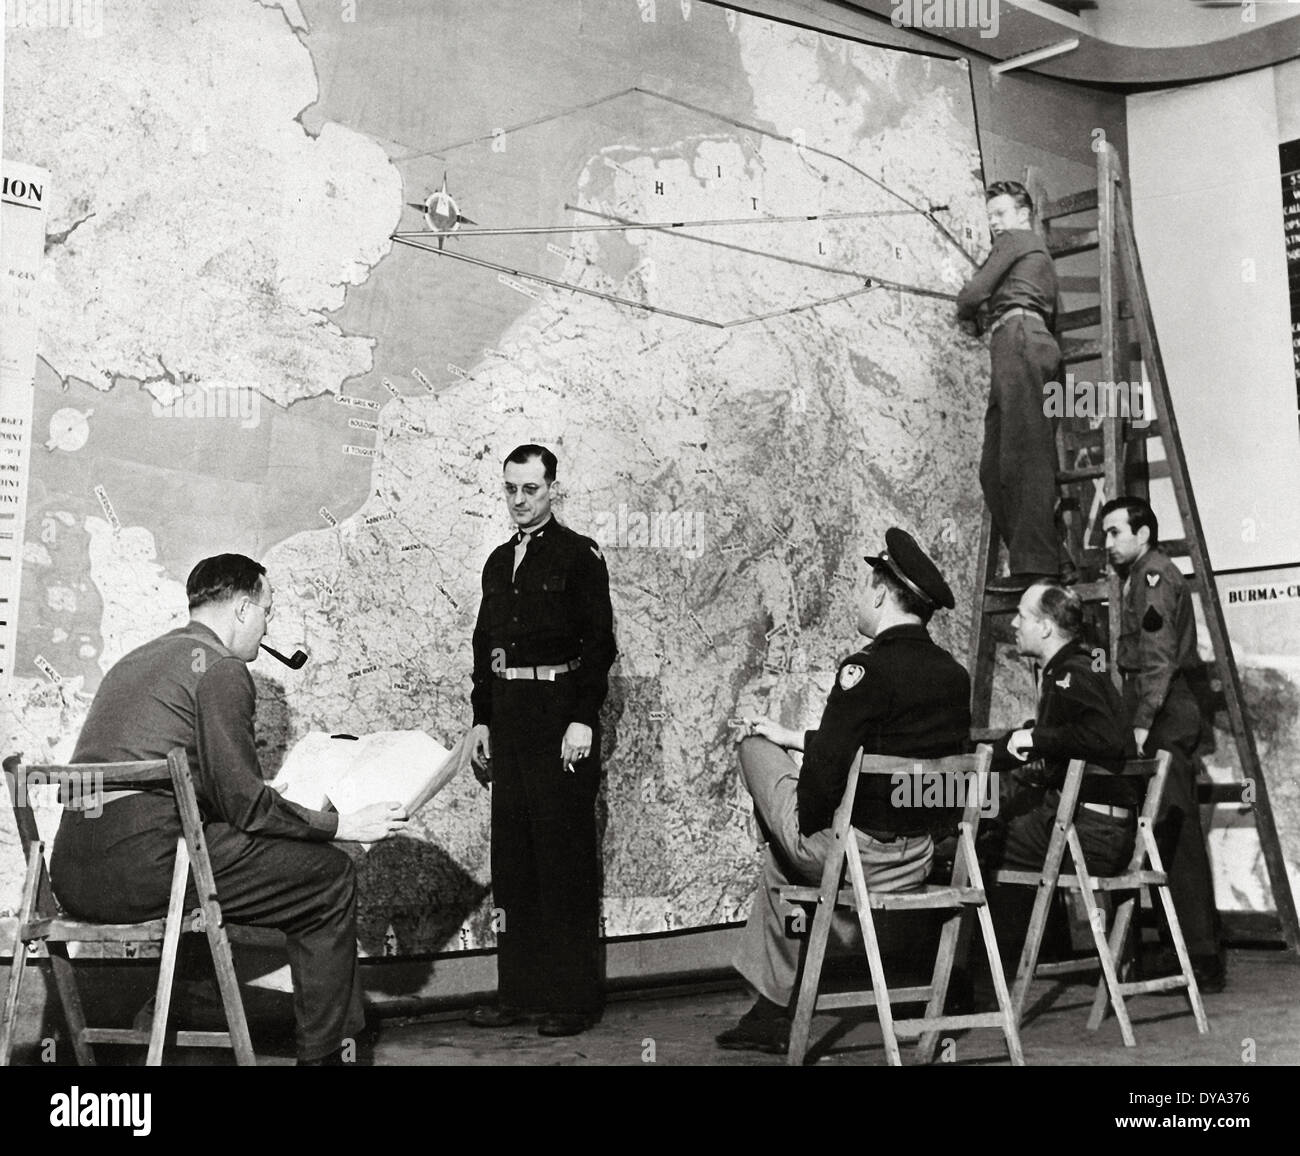 WW II historische Krieg Weltkrieg Krieg Betrieb Overlord Overlord Invasion sechs Männer Wandkarte Ärmelkanal Western Stockfoto